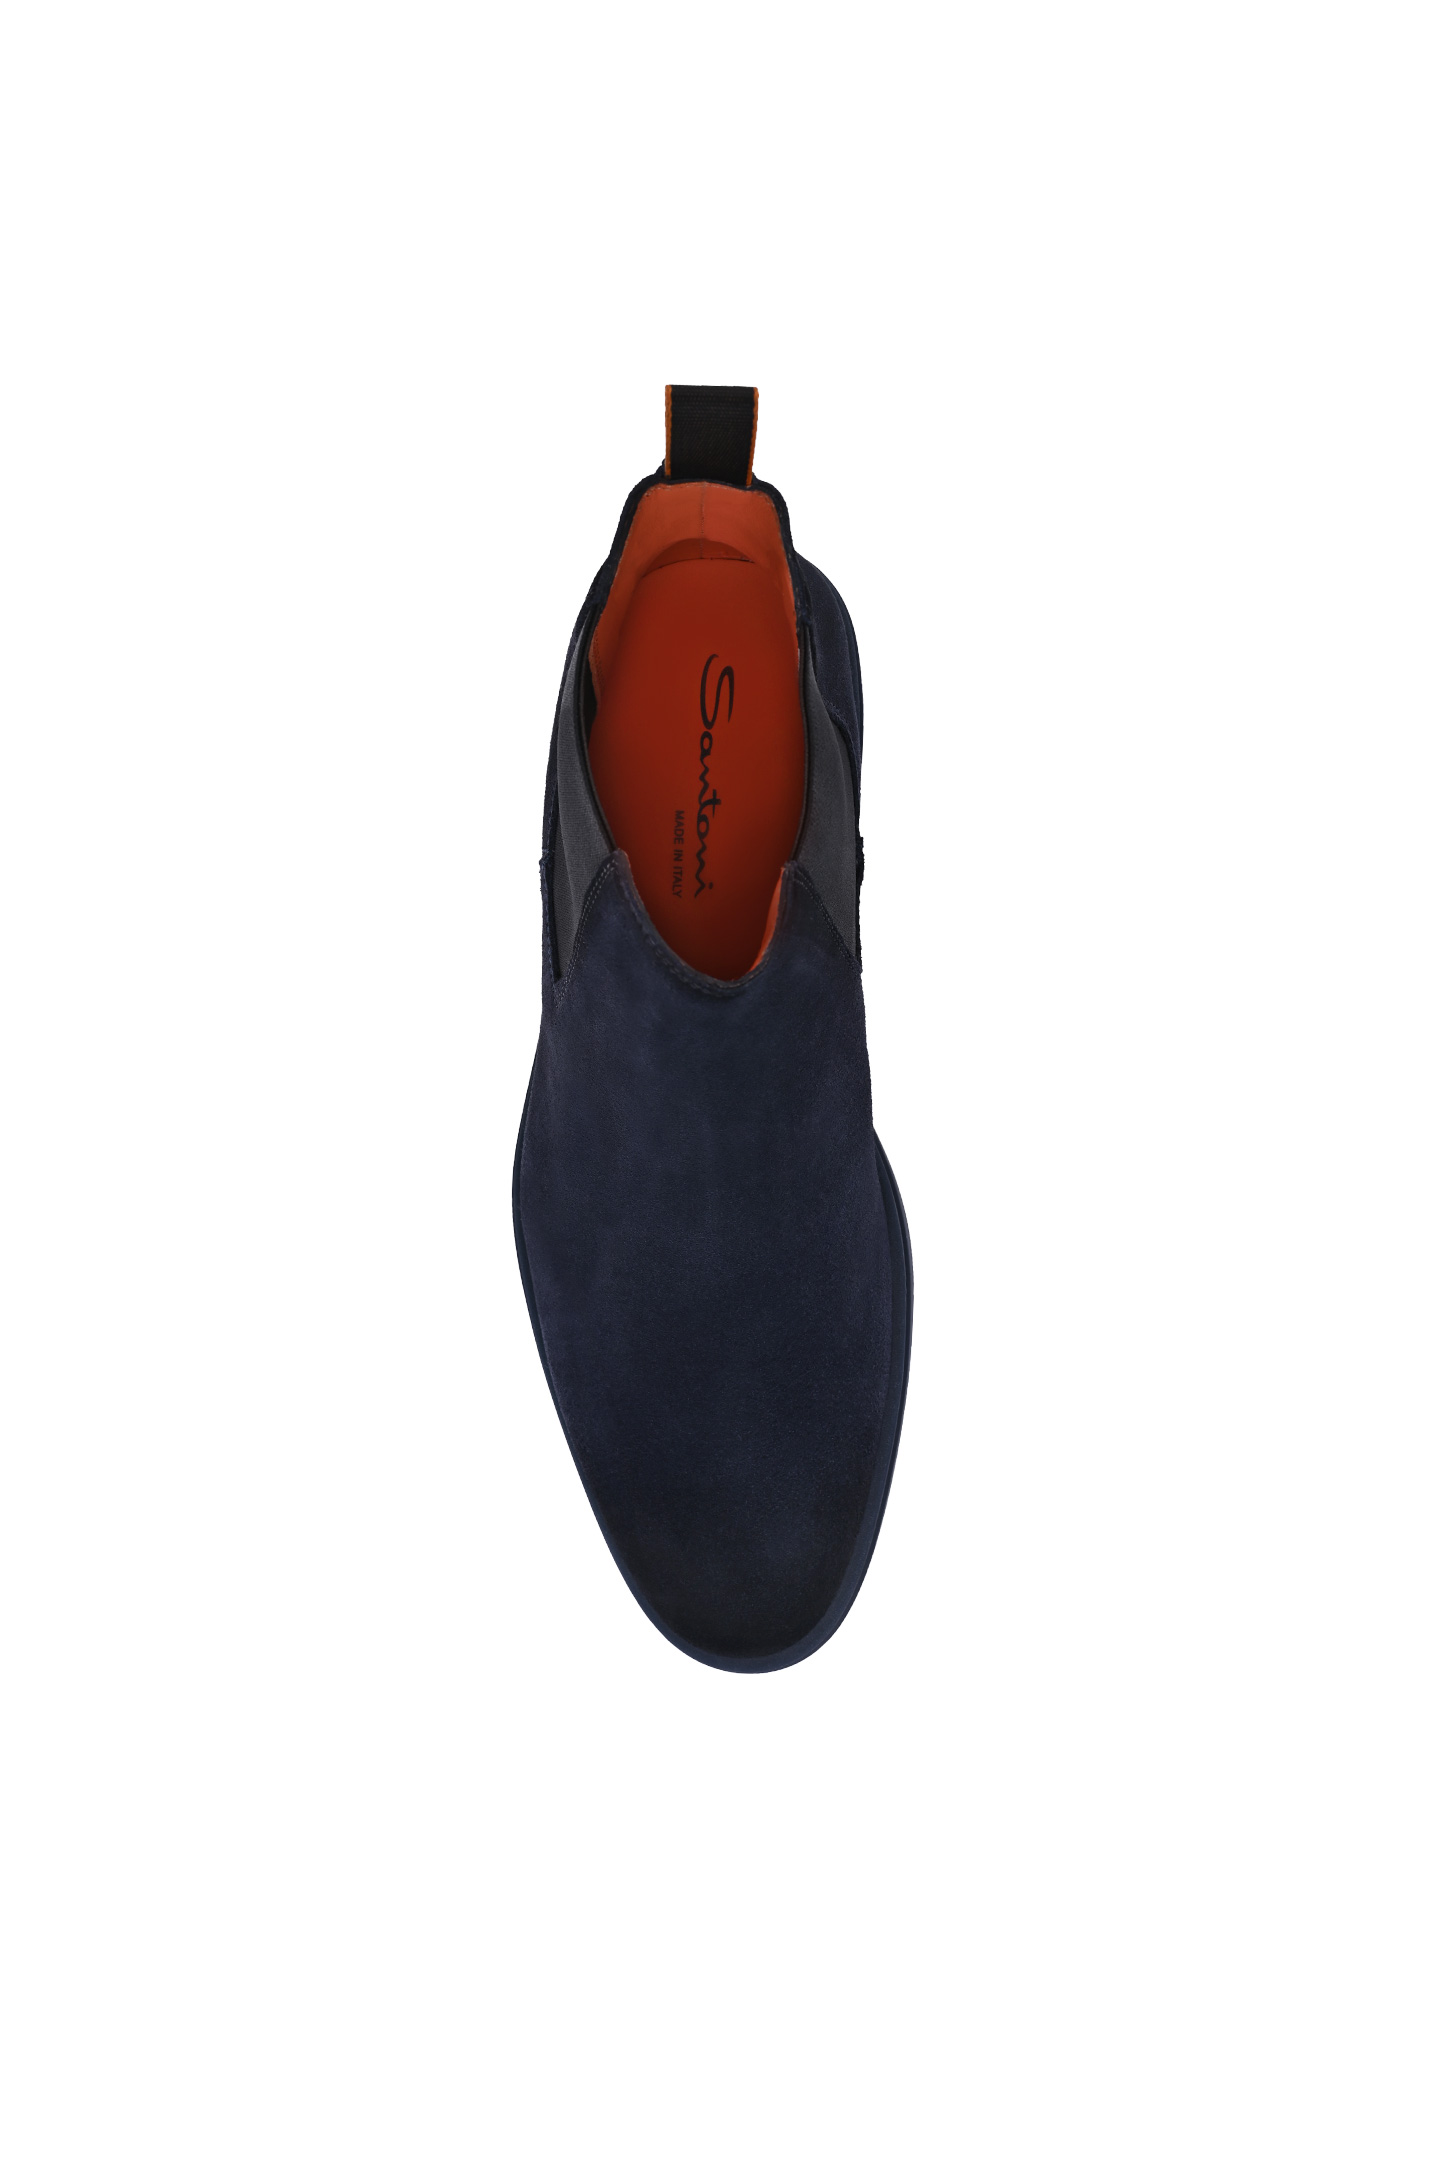 Ботинки SANTONI MGDG18588OOTBGE, цвет: Темно-синий, Мужской